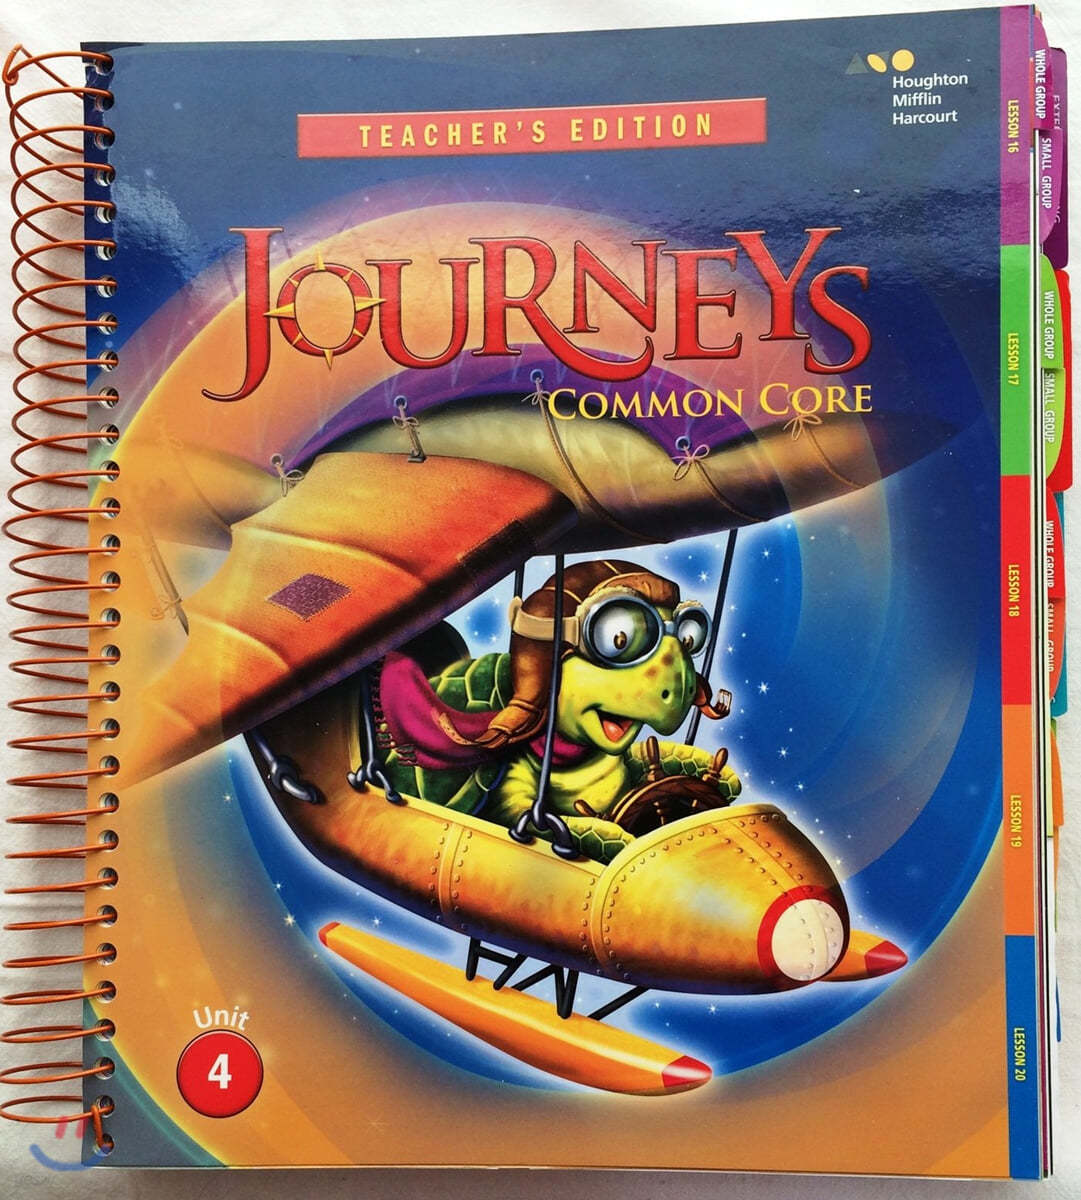 Journeys Common Core Teacher's Edition G2.4